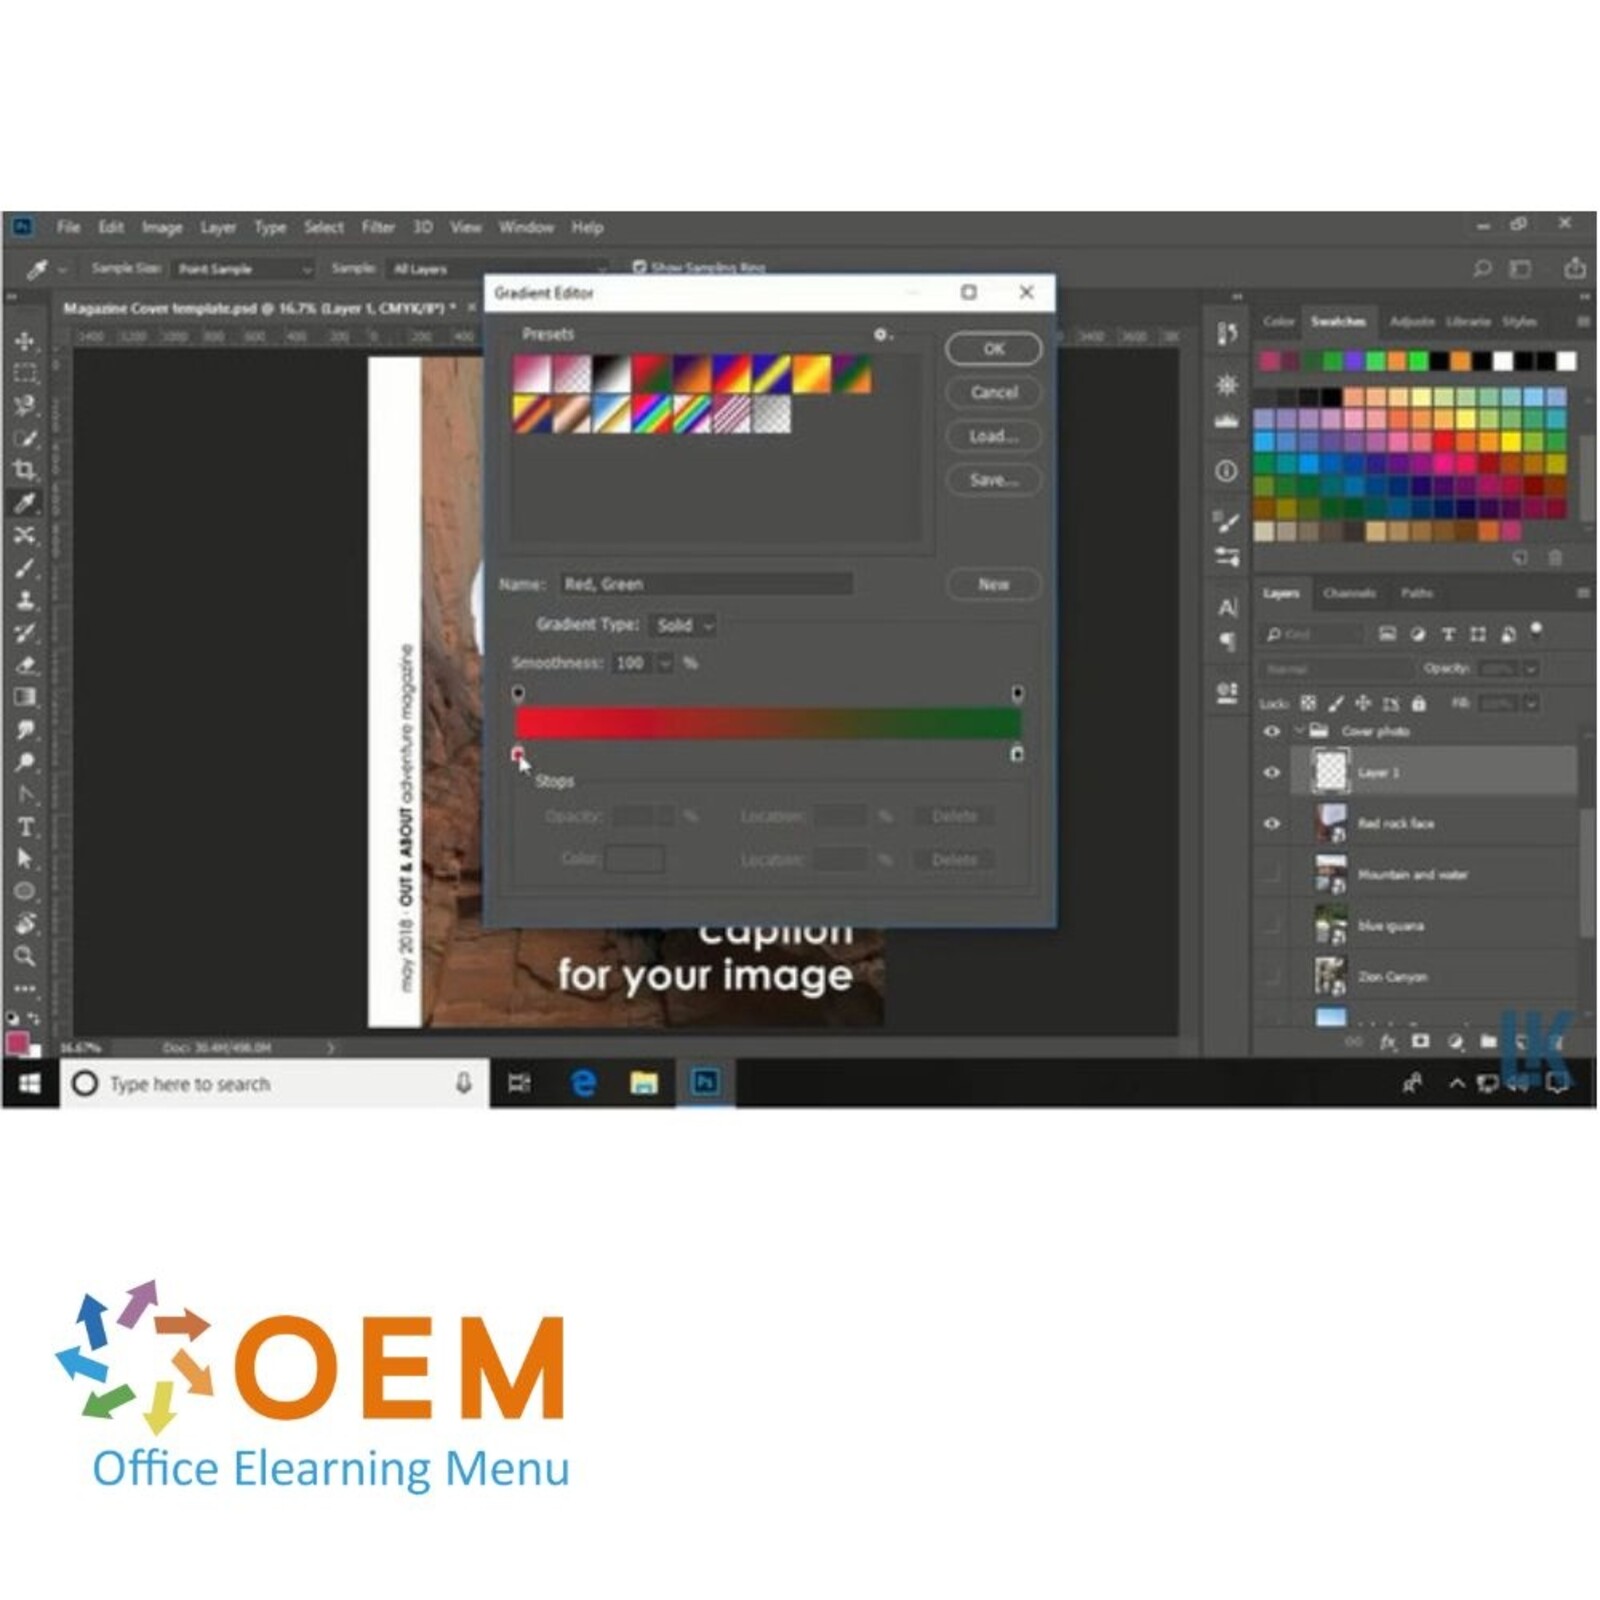 Adobe Vaardigheden Leren: Expert-ICT Trainingen Adobe Photoshop CC 2021 Course E-Learning